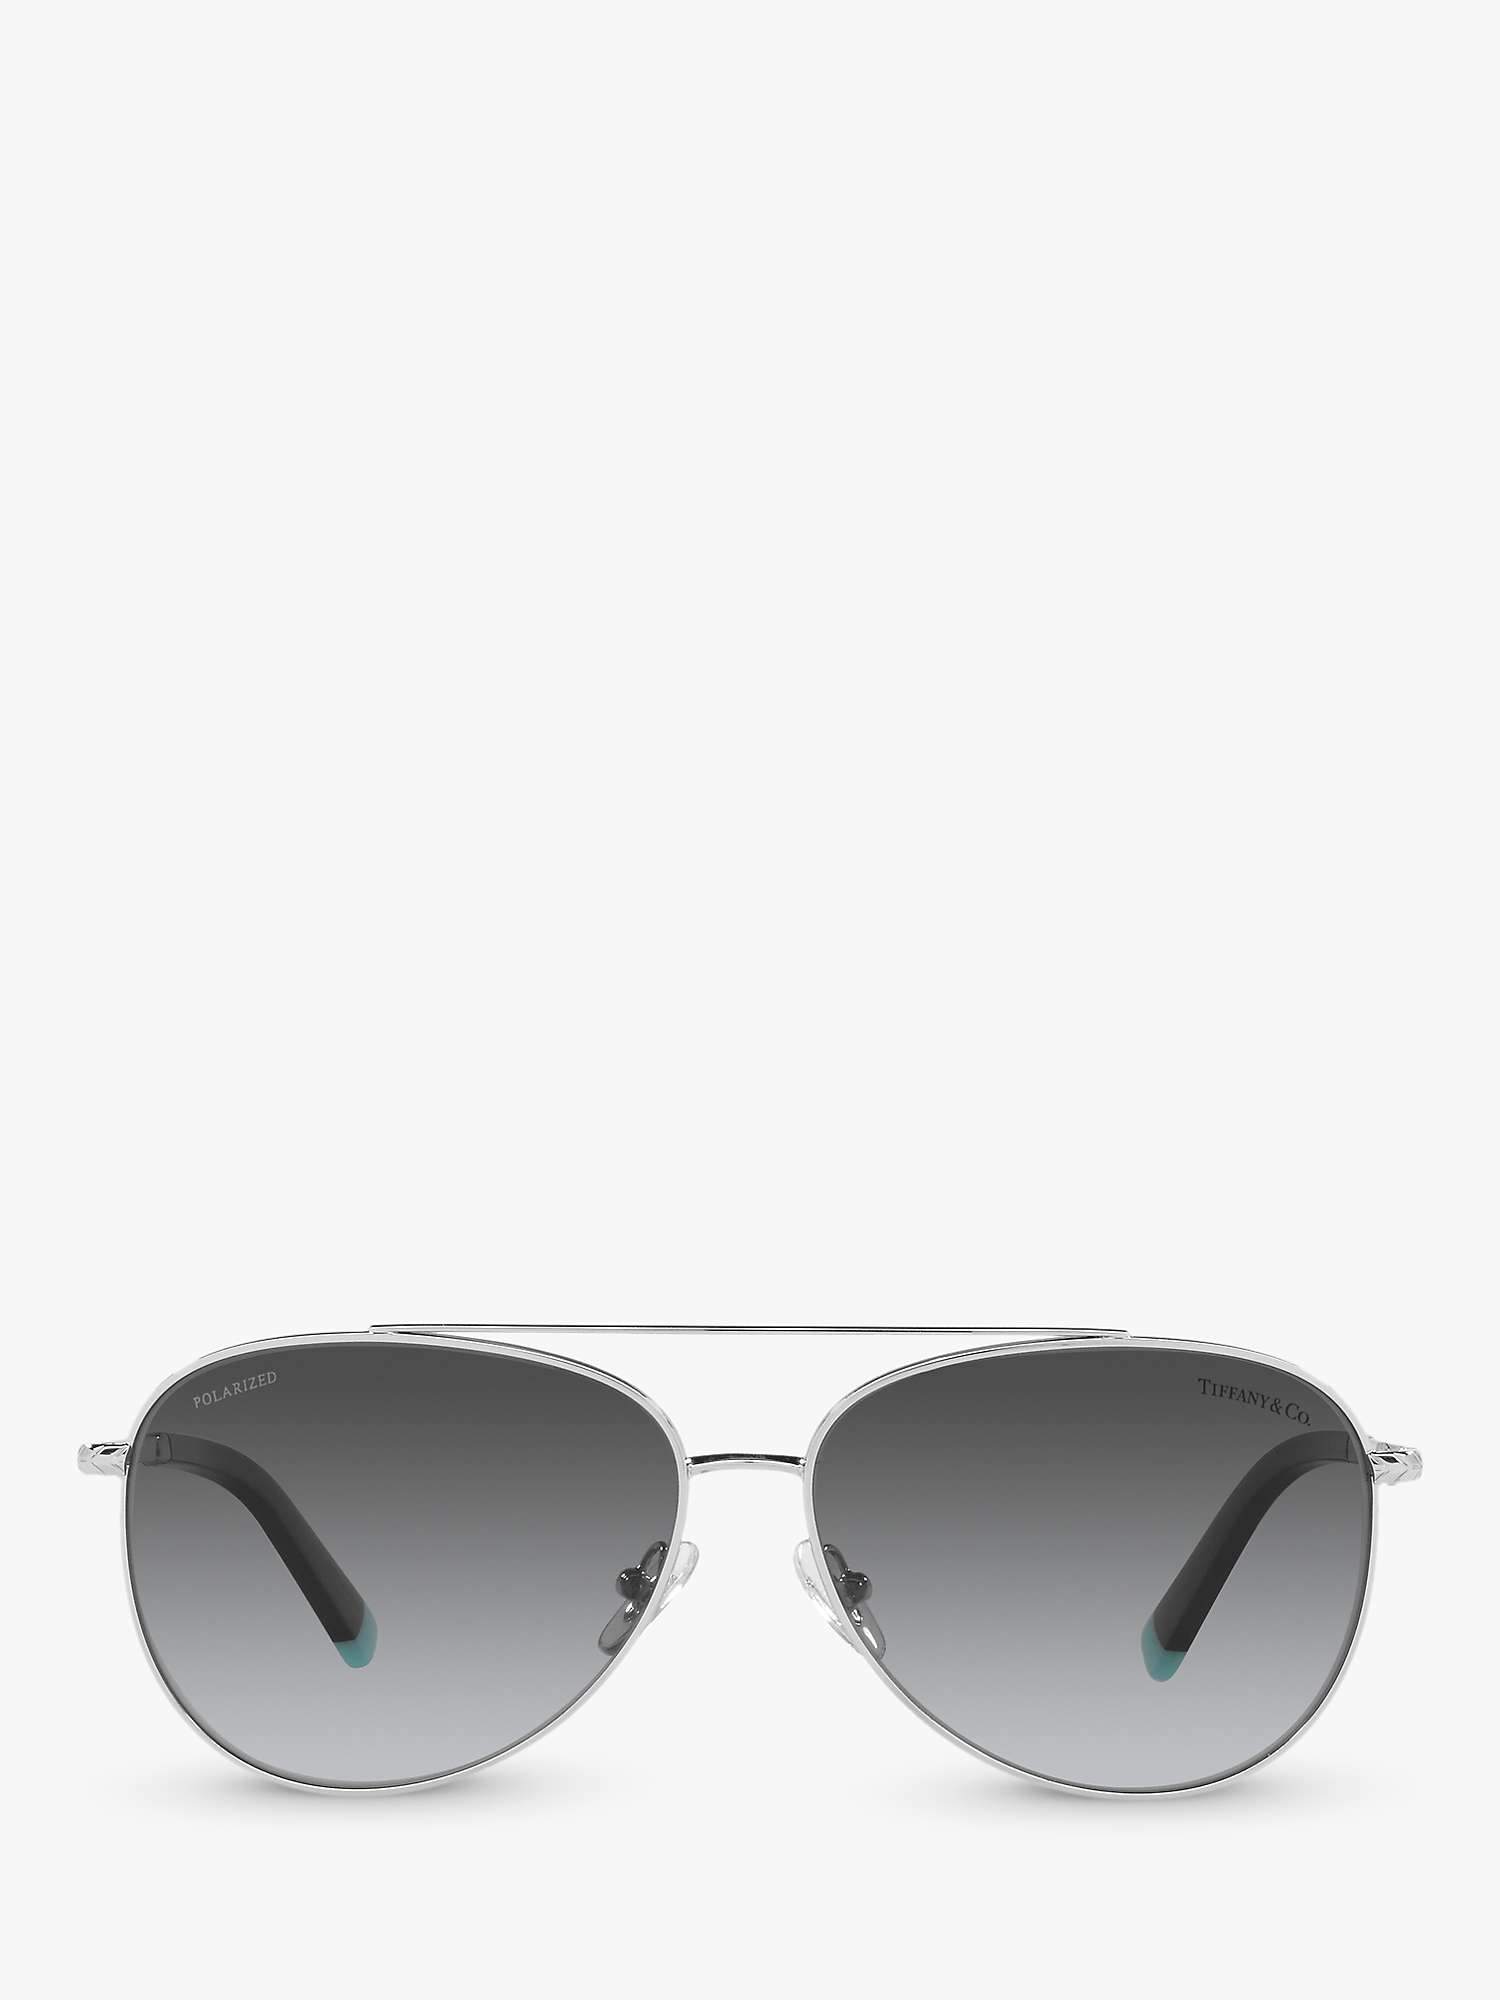 Buy Tiffany & Co TF3074 Women's Polarised Aviator Sunglasses, Silver/Black Online at johnlewis.com